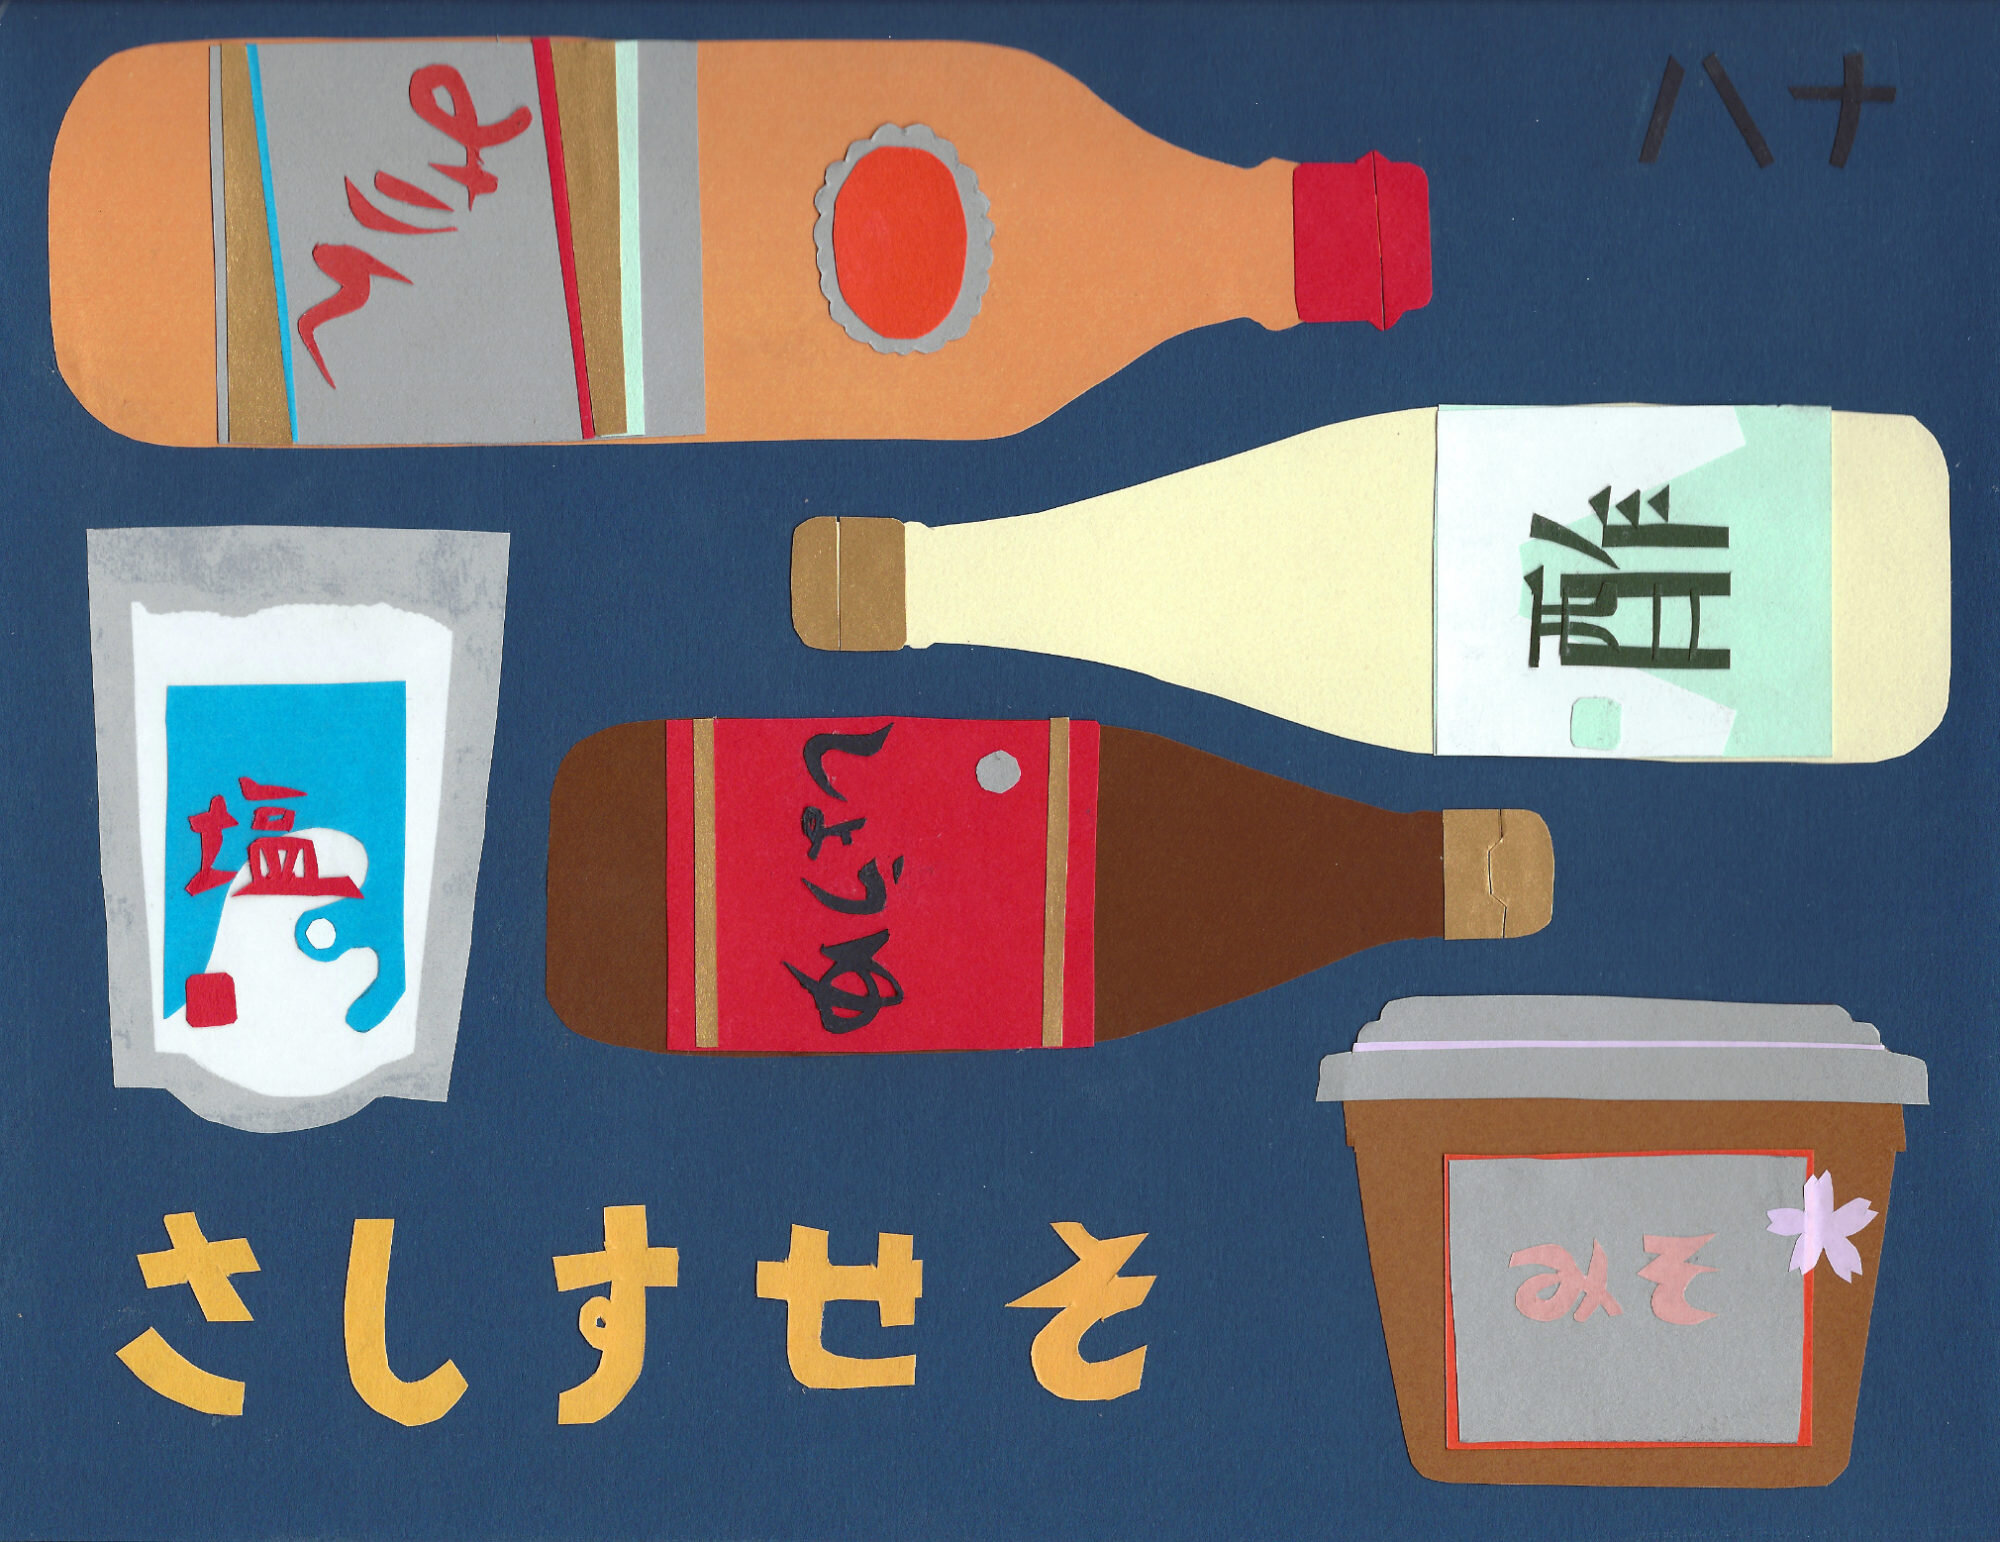 Sa-shi-su-se-so: The ABCs of Japanese Cooking